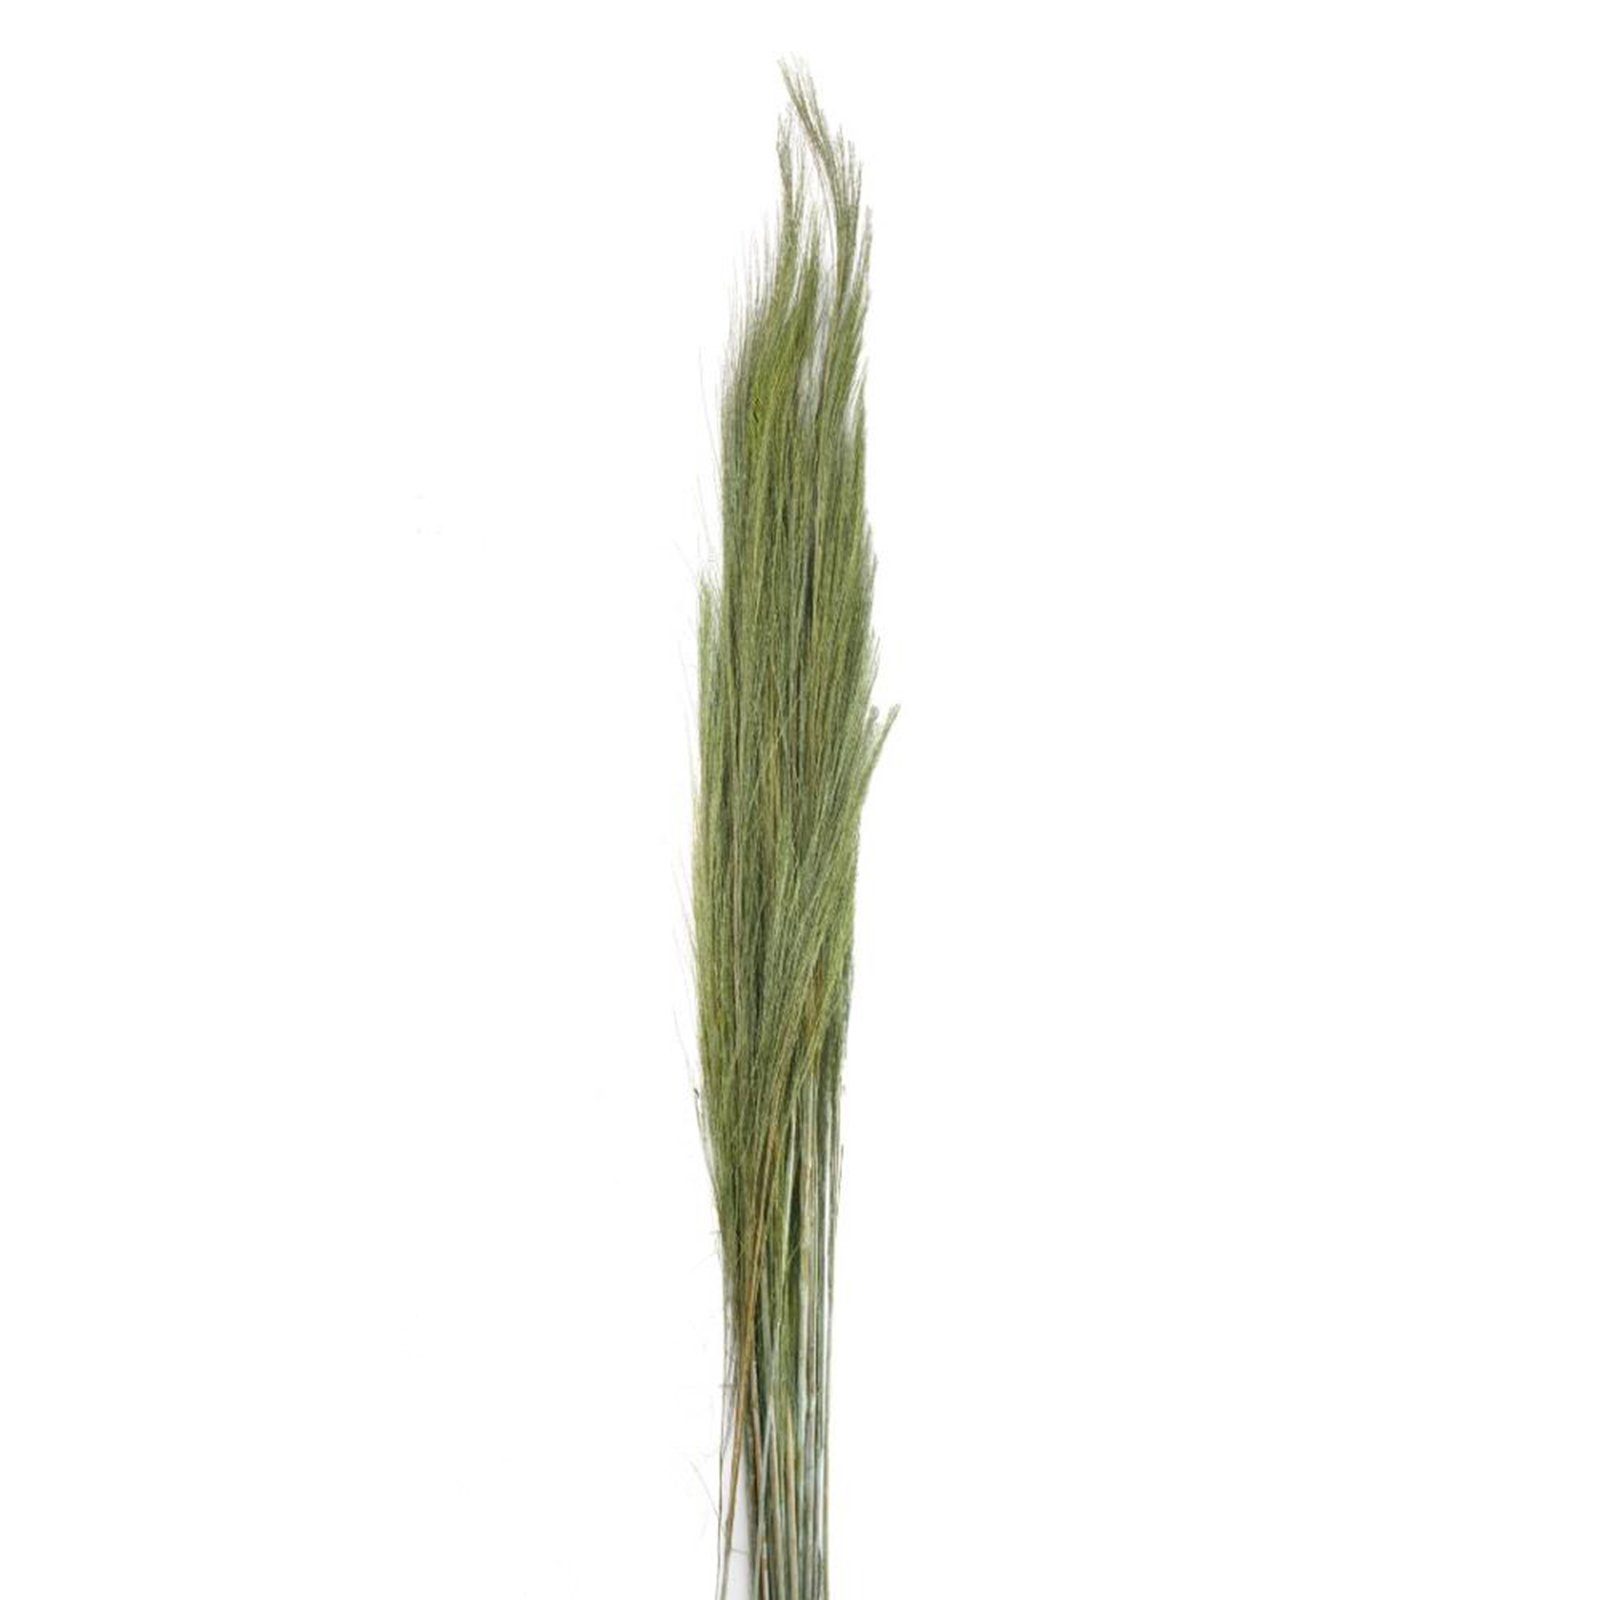 Trockenblume Ginstergras grün - Broom grass - Thysanolaena - 90-105 cm -100g, DIJK